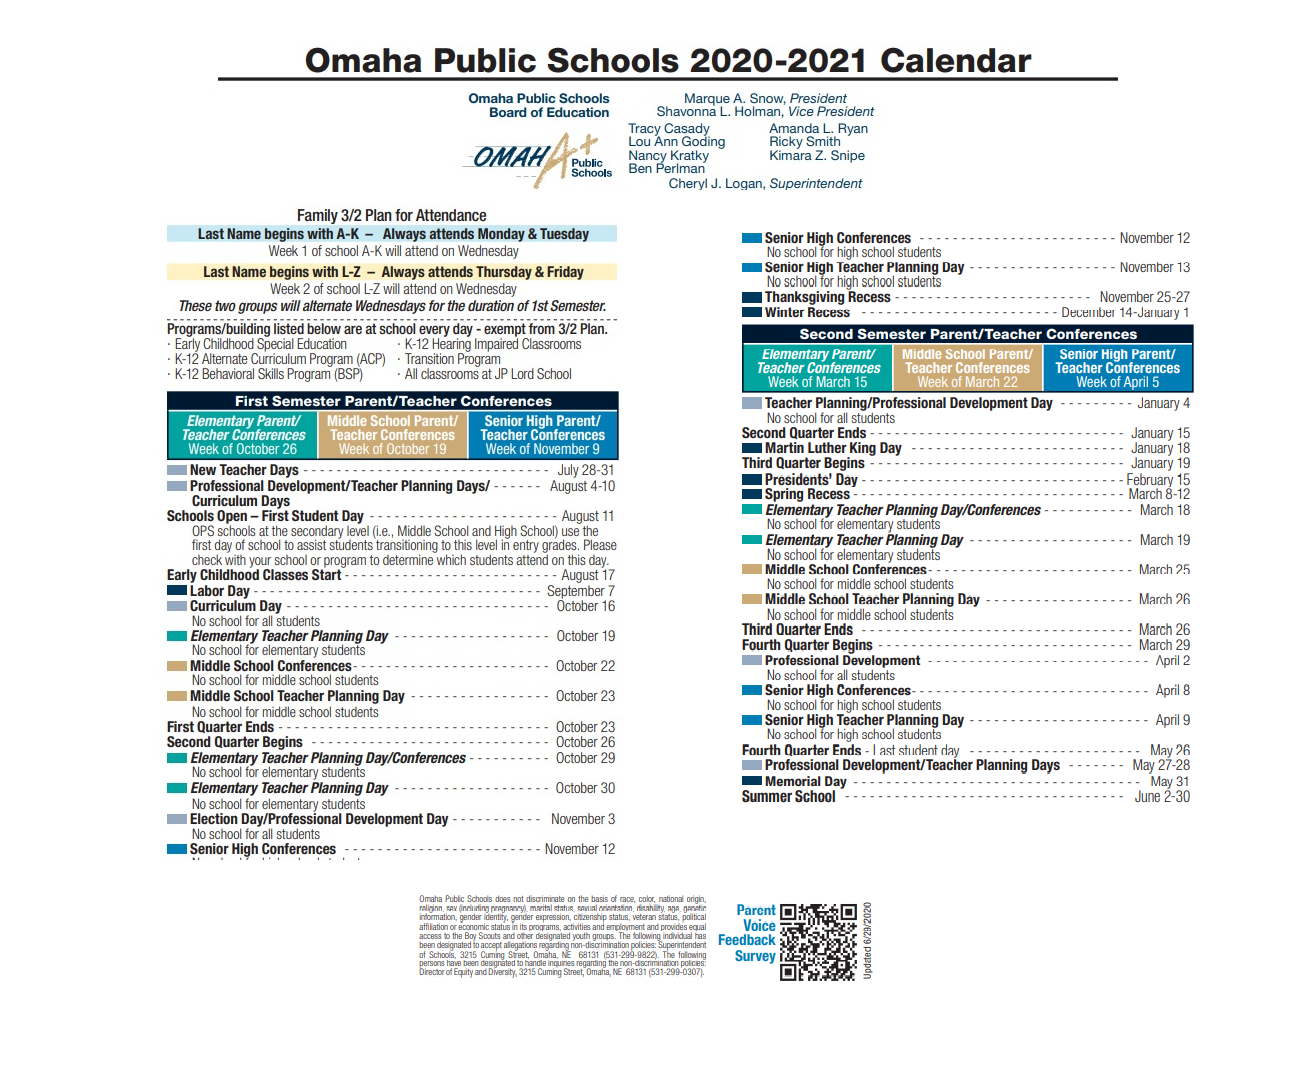 District School Academic Calendar Key for Adams Elementary School